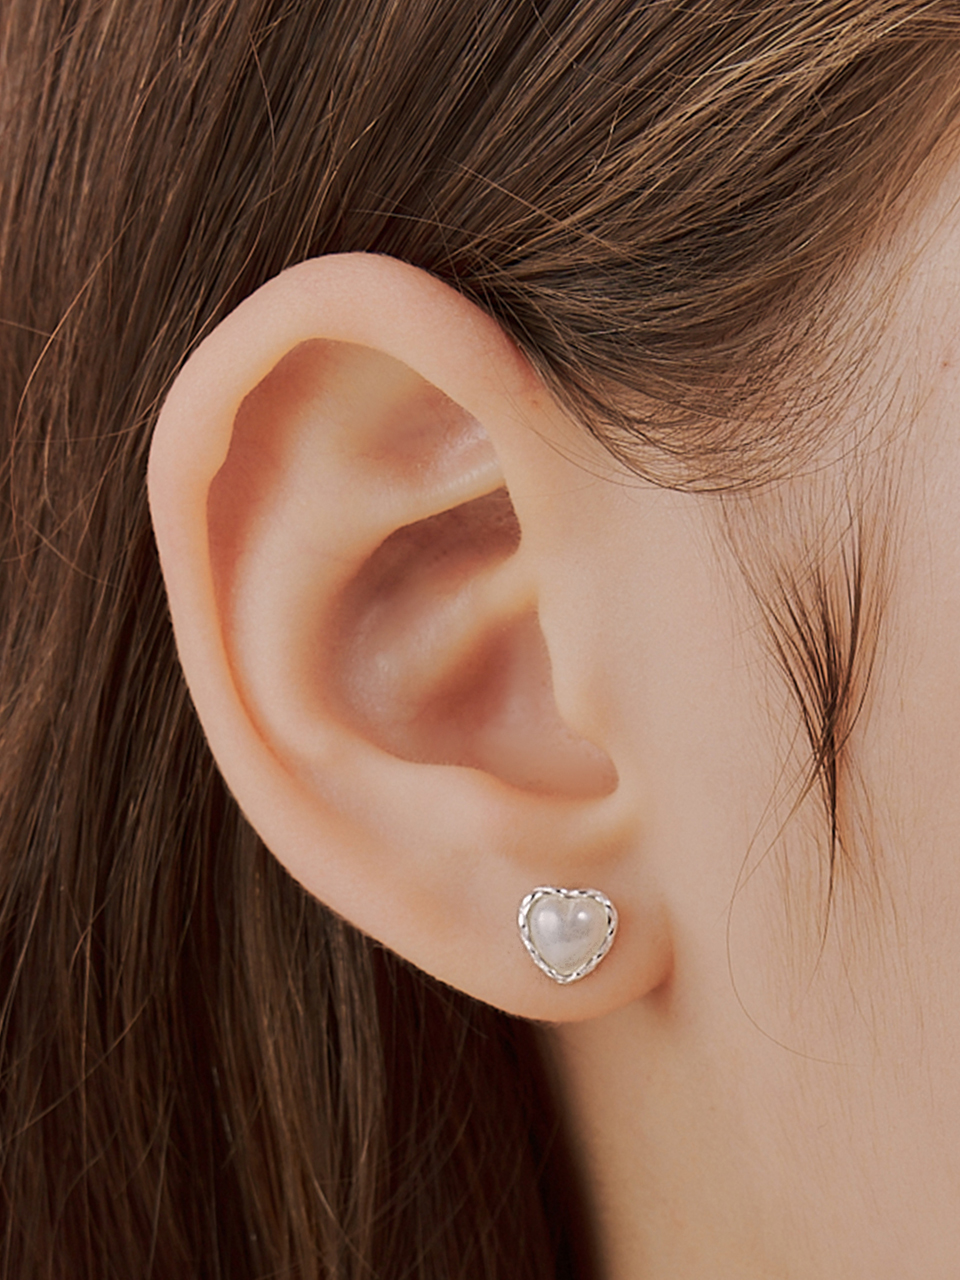 snow white pearl earring